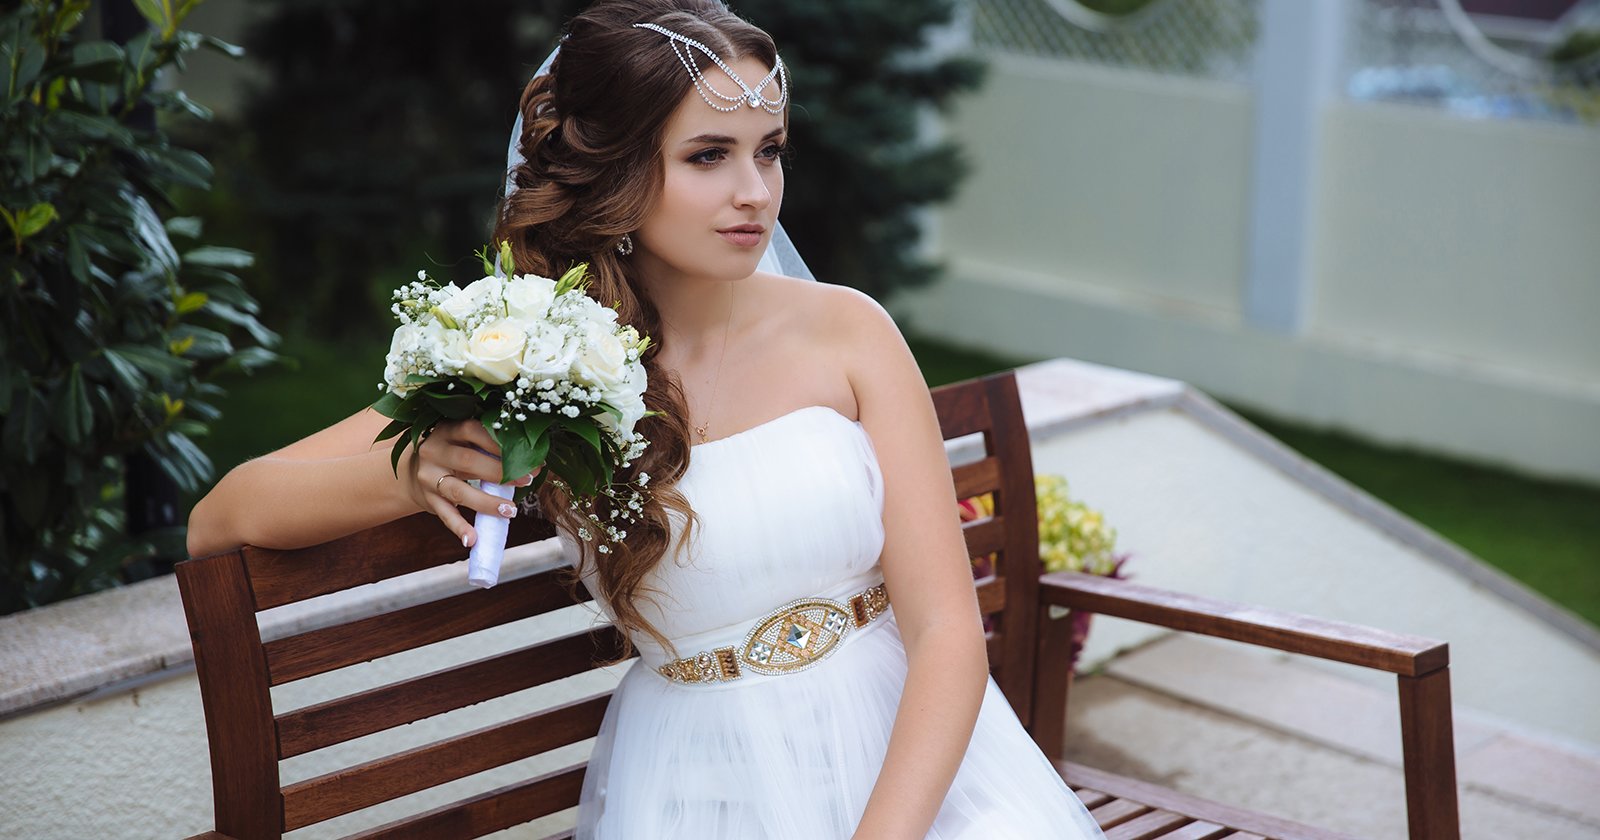 Greek Goddess Wedding Dress Strapless